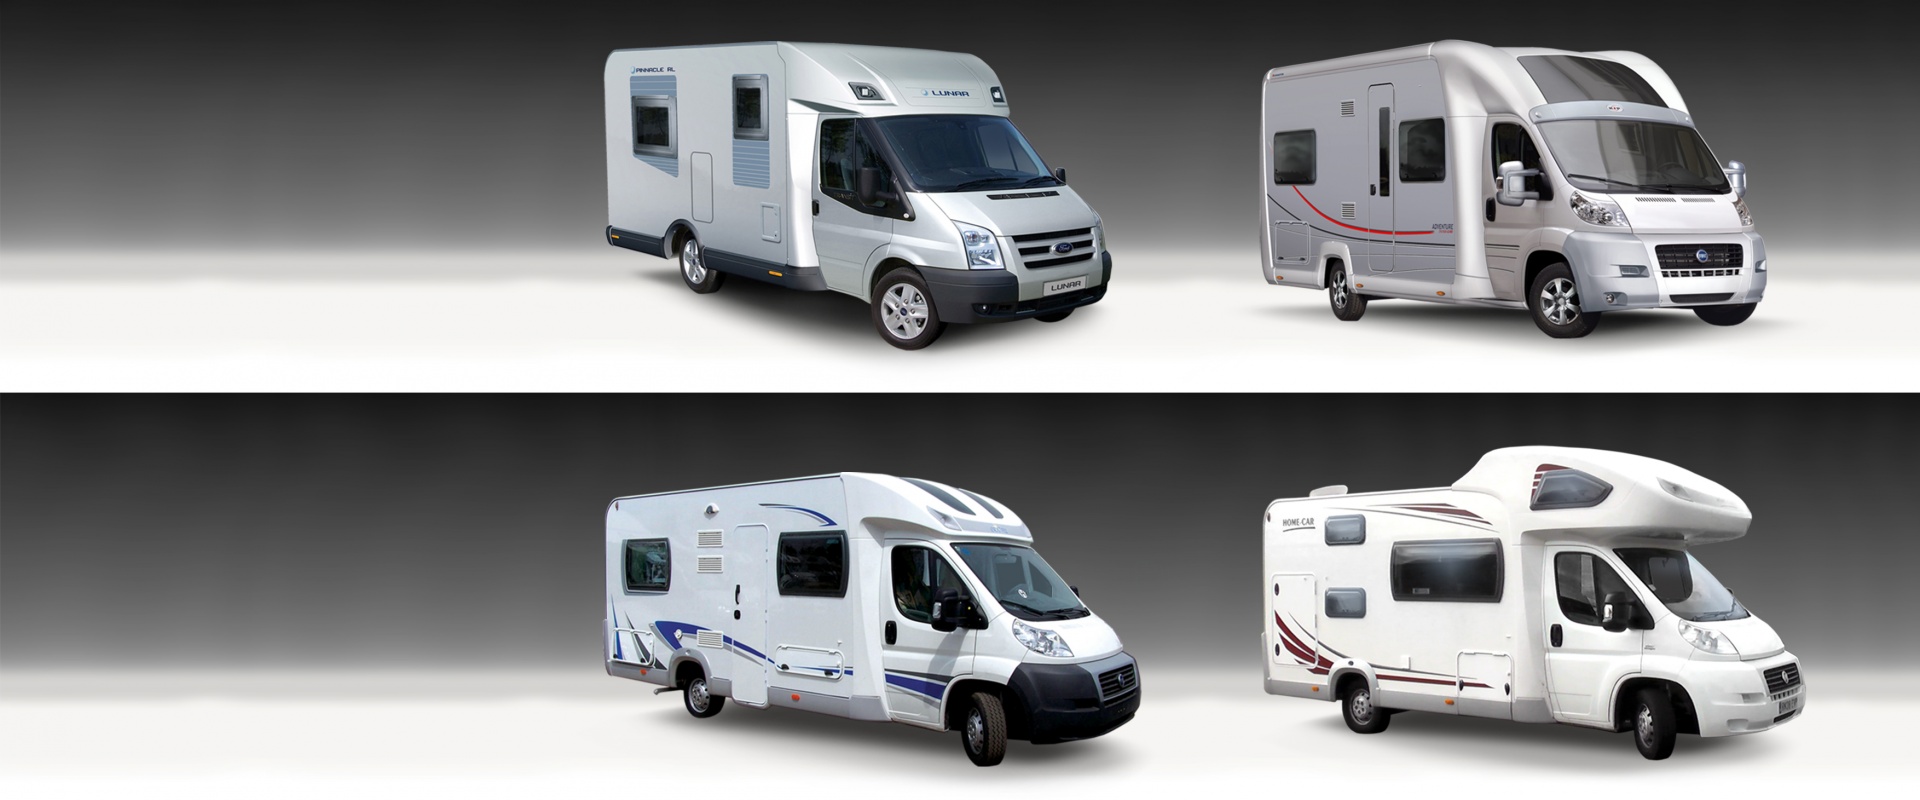 201709085-website-kleine-voertuigen-campers.jpg